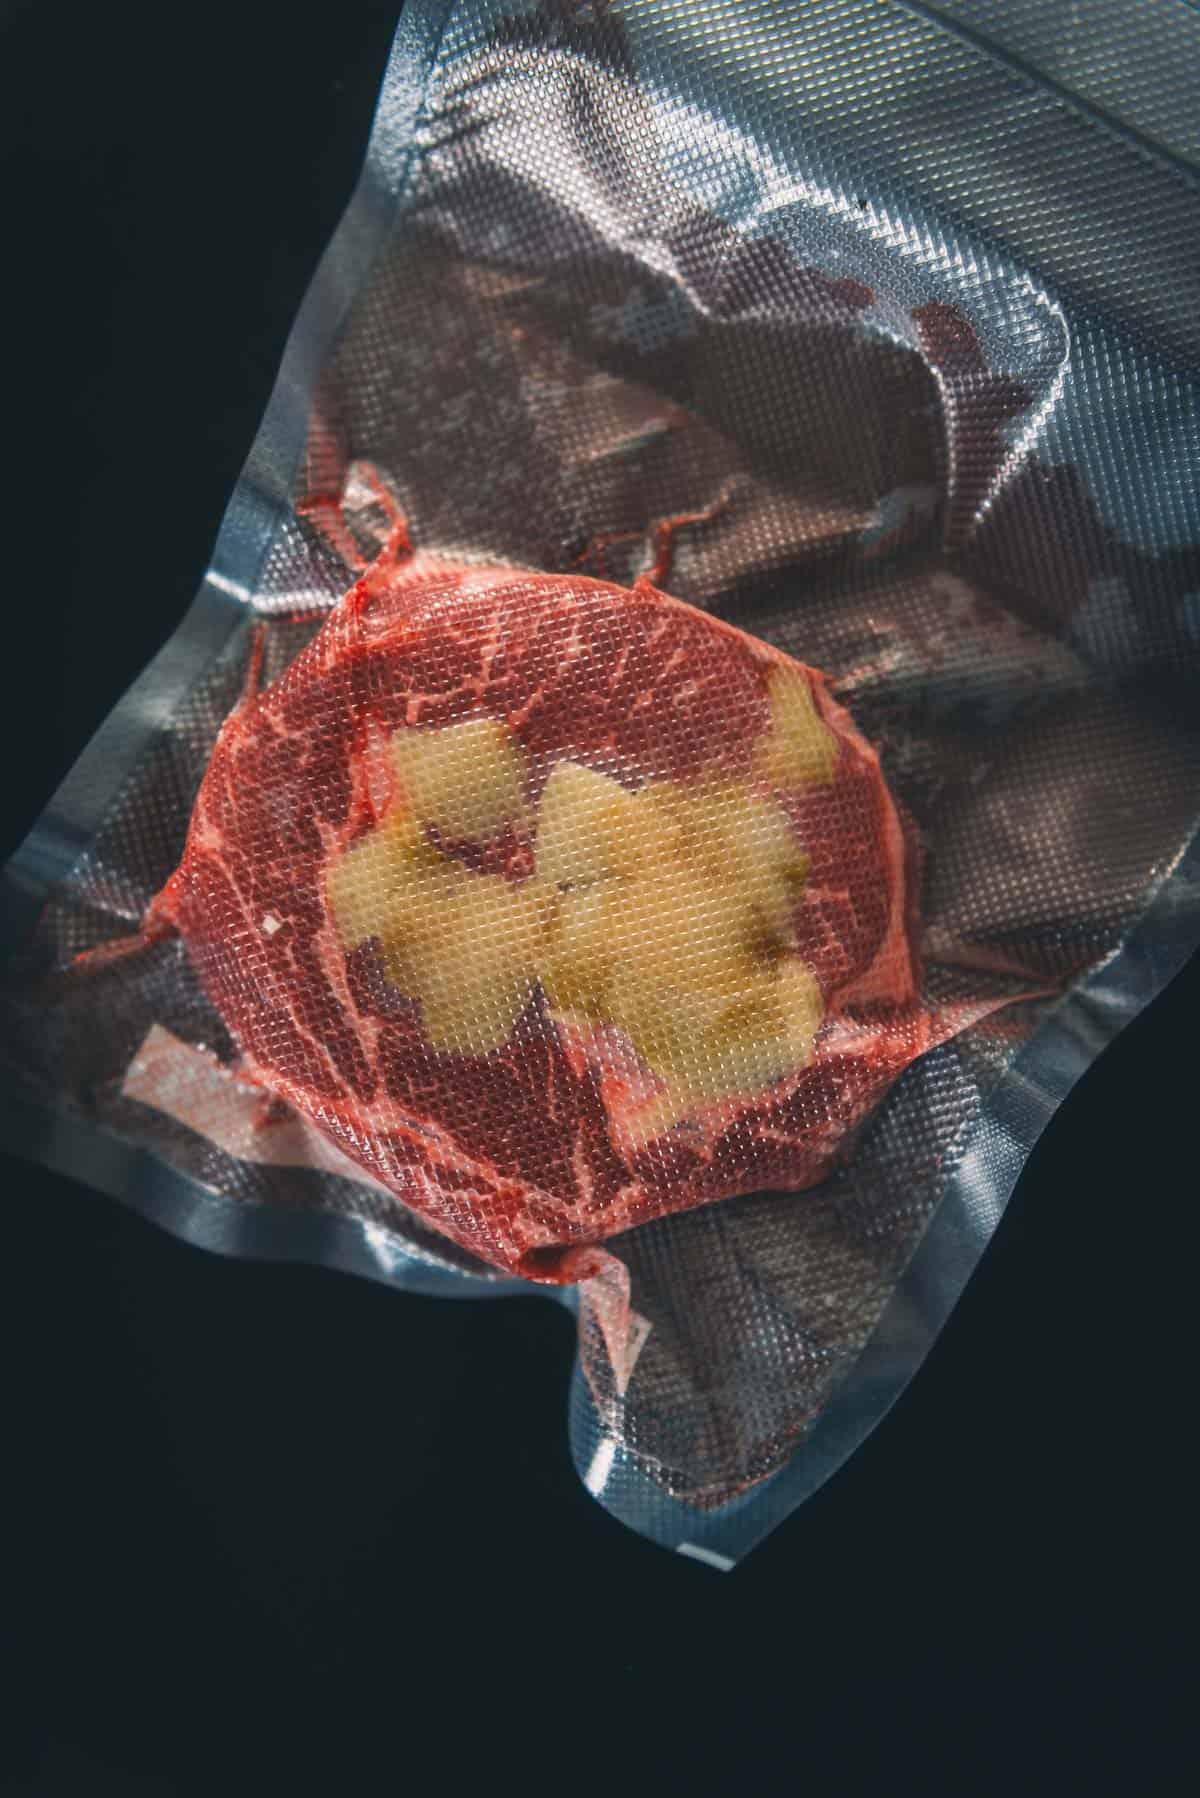 A steak in a vacuum sealed bag with garlic.